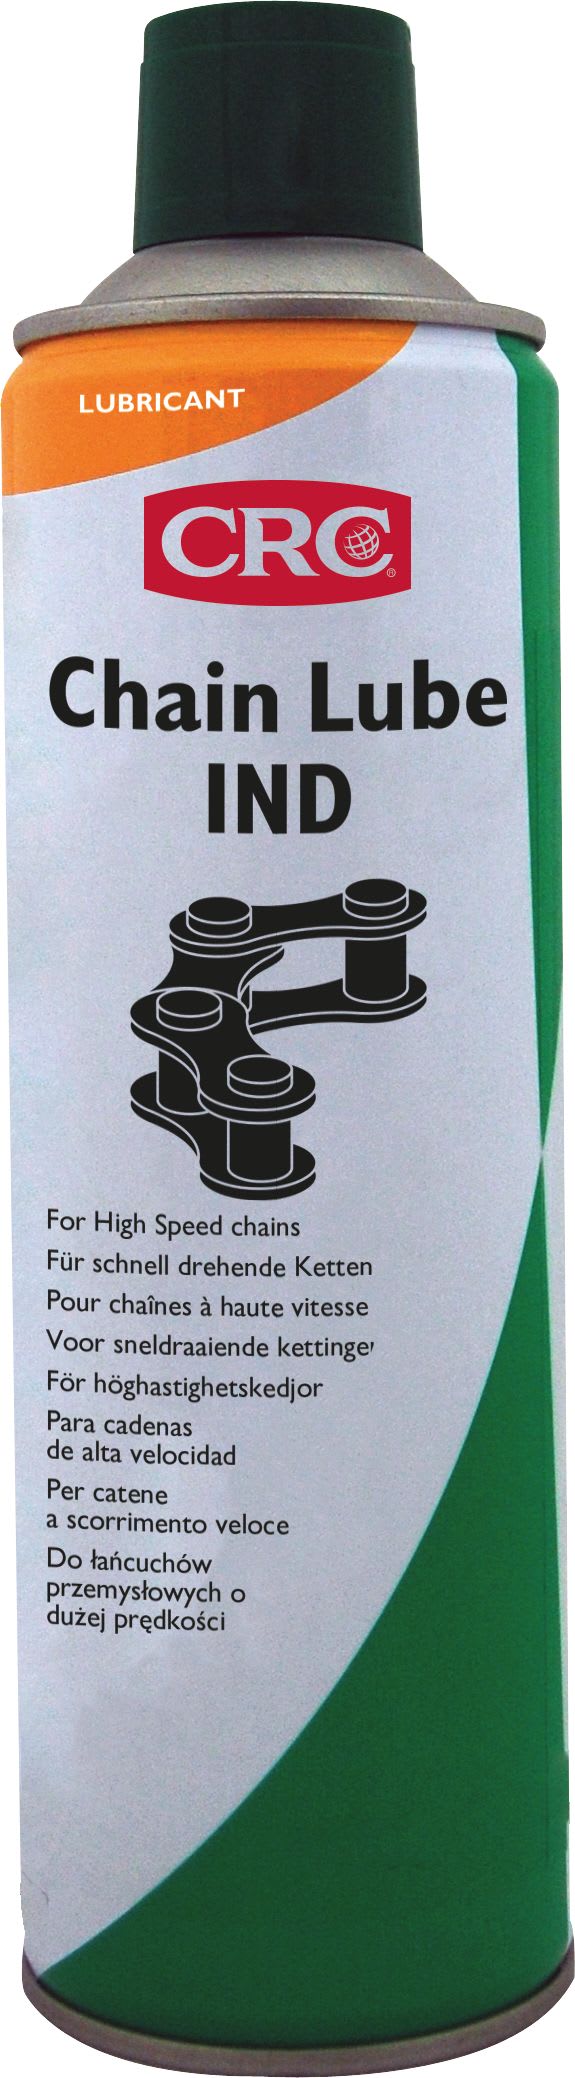 Kf - Chain Lube IND 500 ML